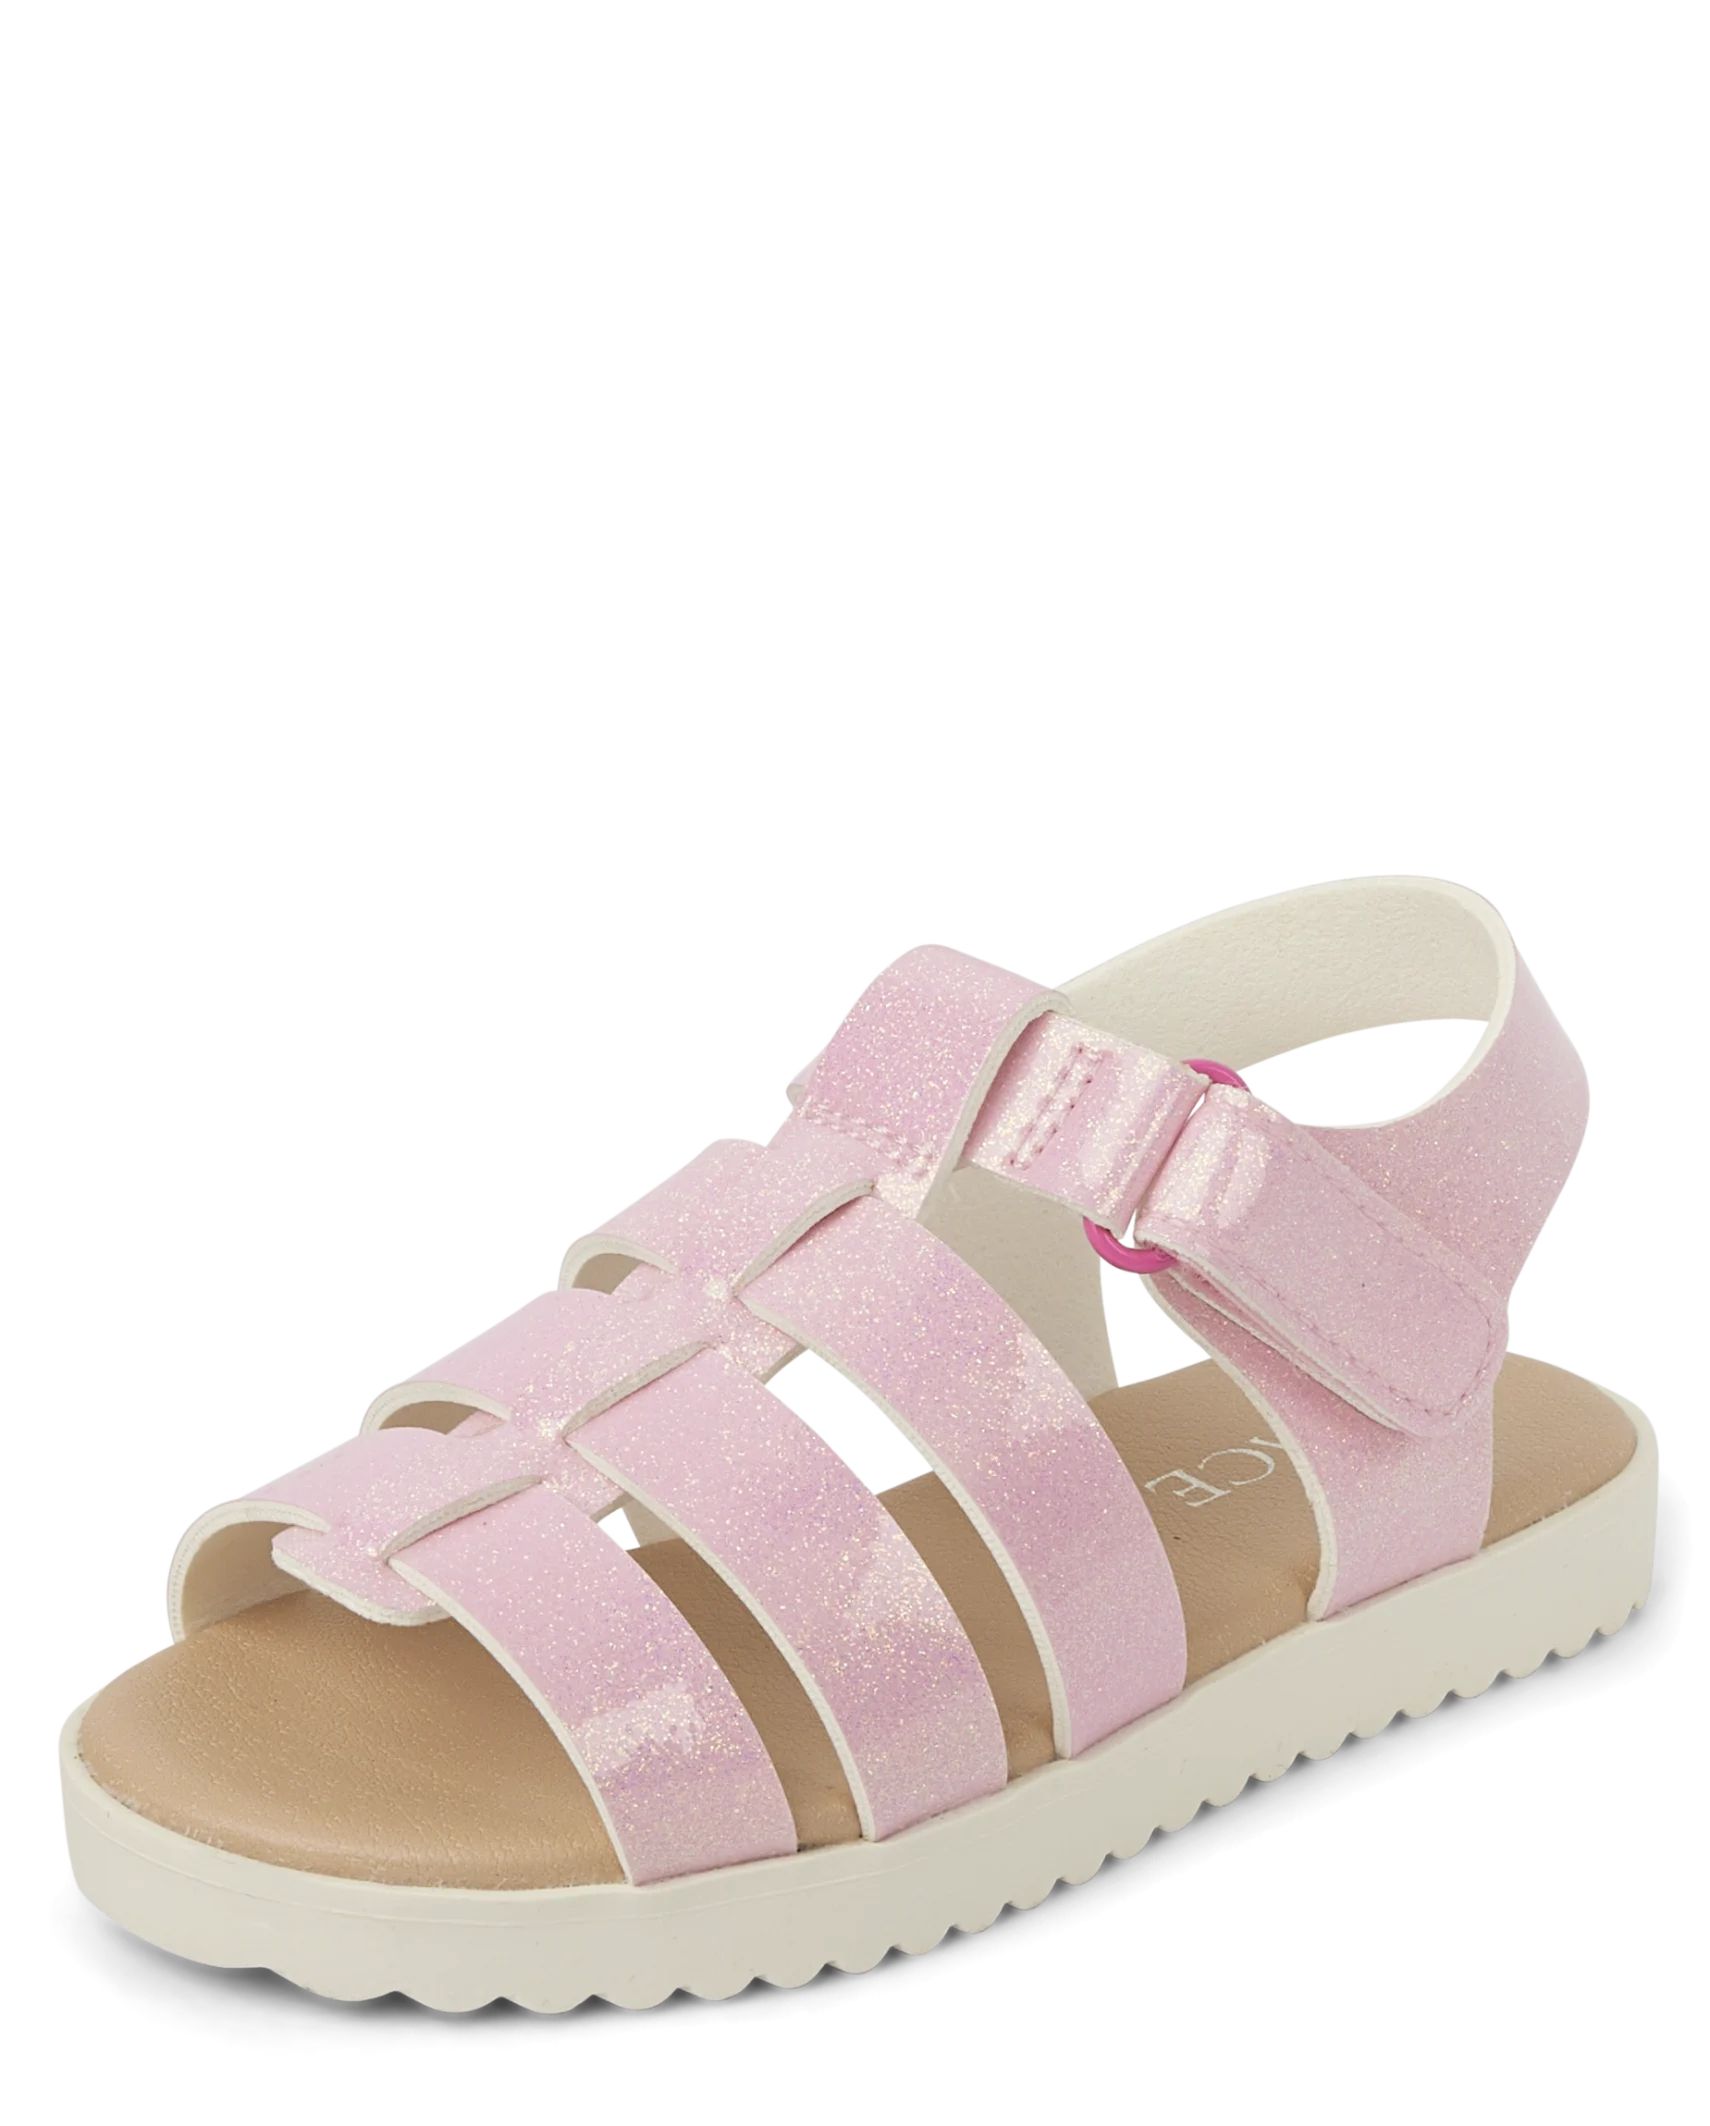 Toddler Girls Glitter Gladiator Sandals - pink | The Children's Place